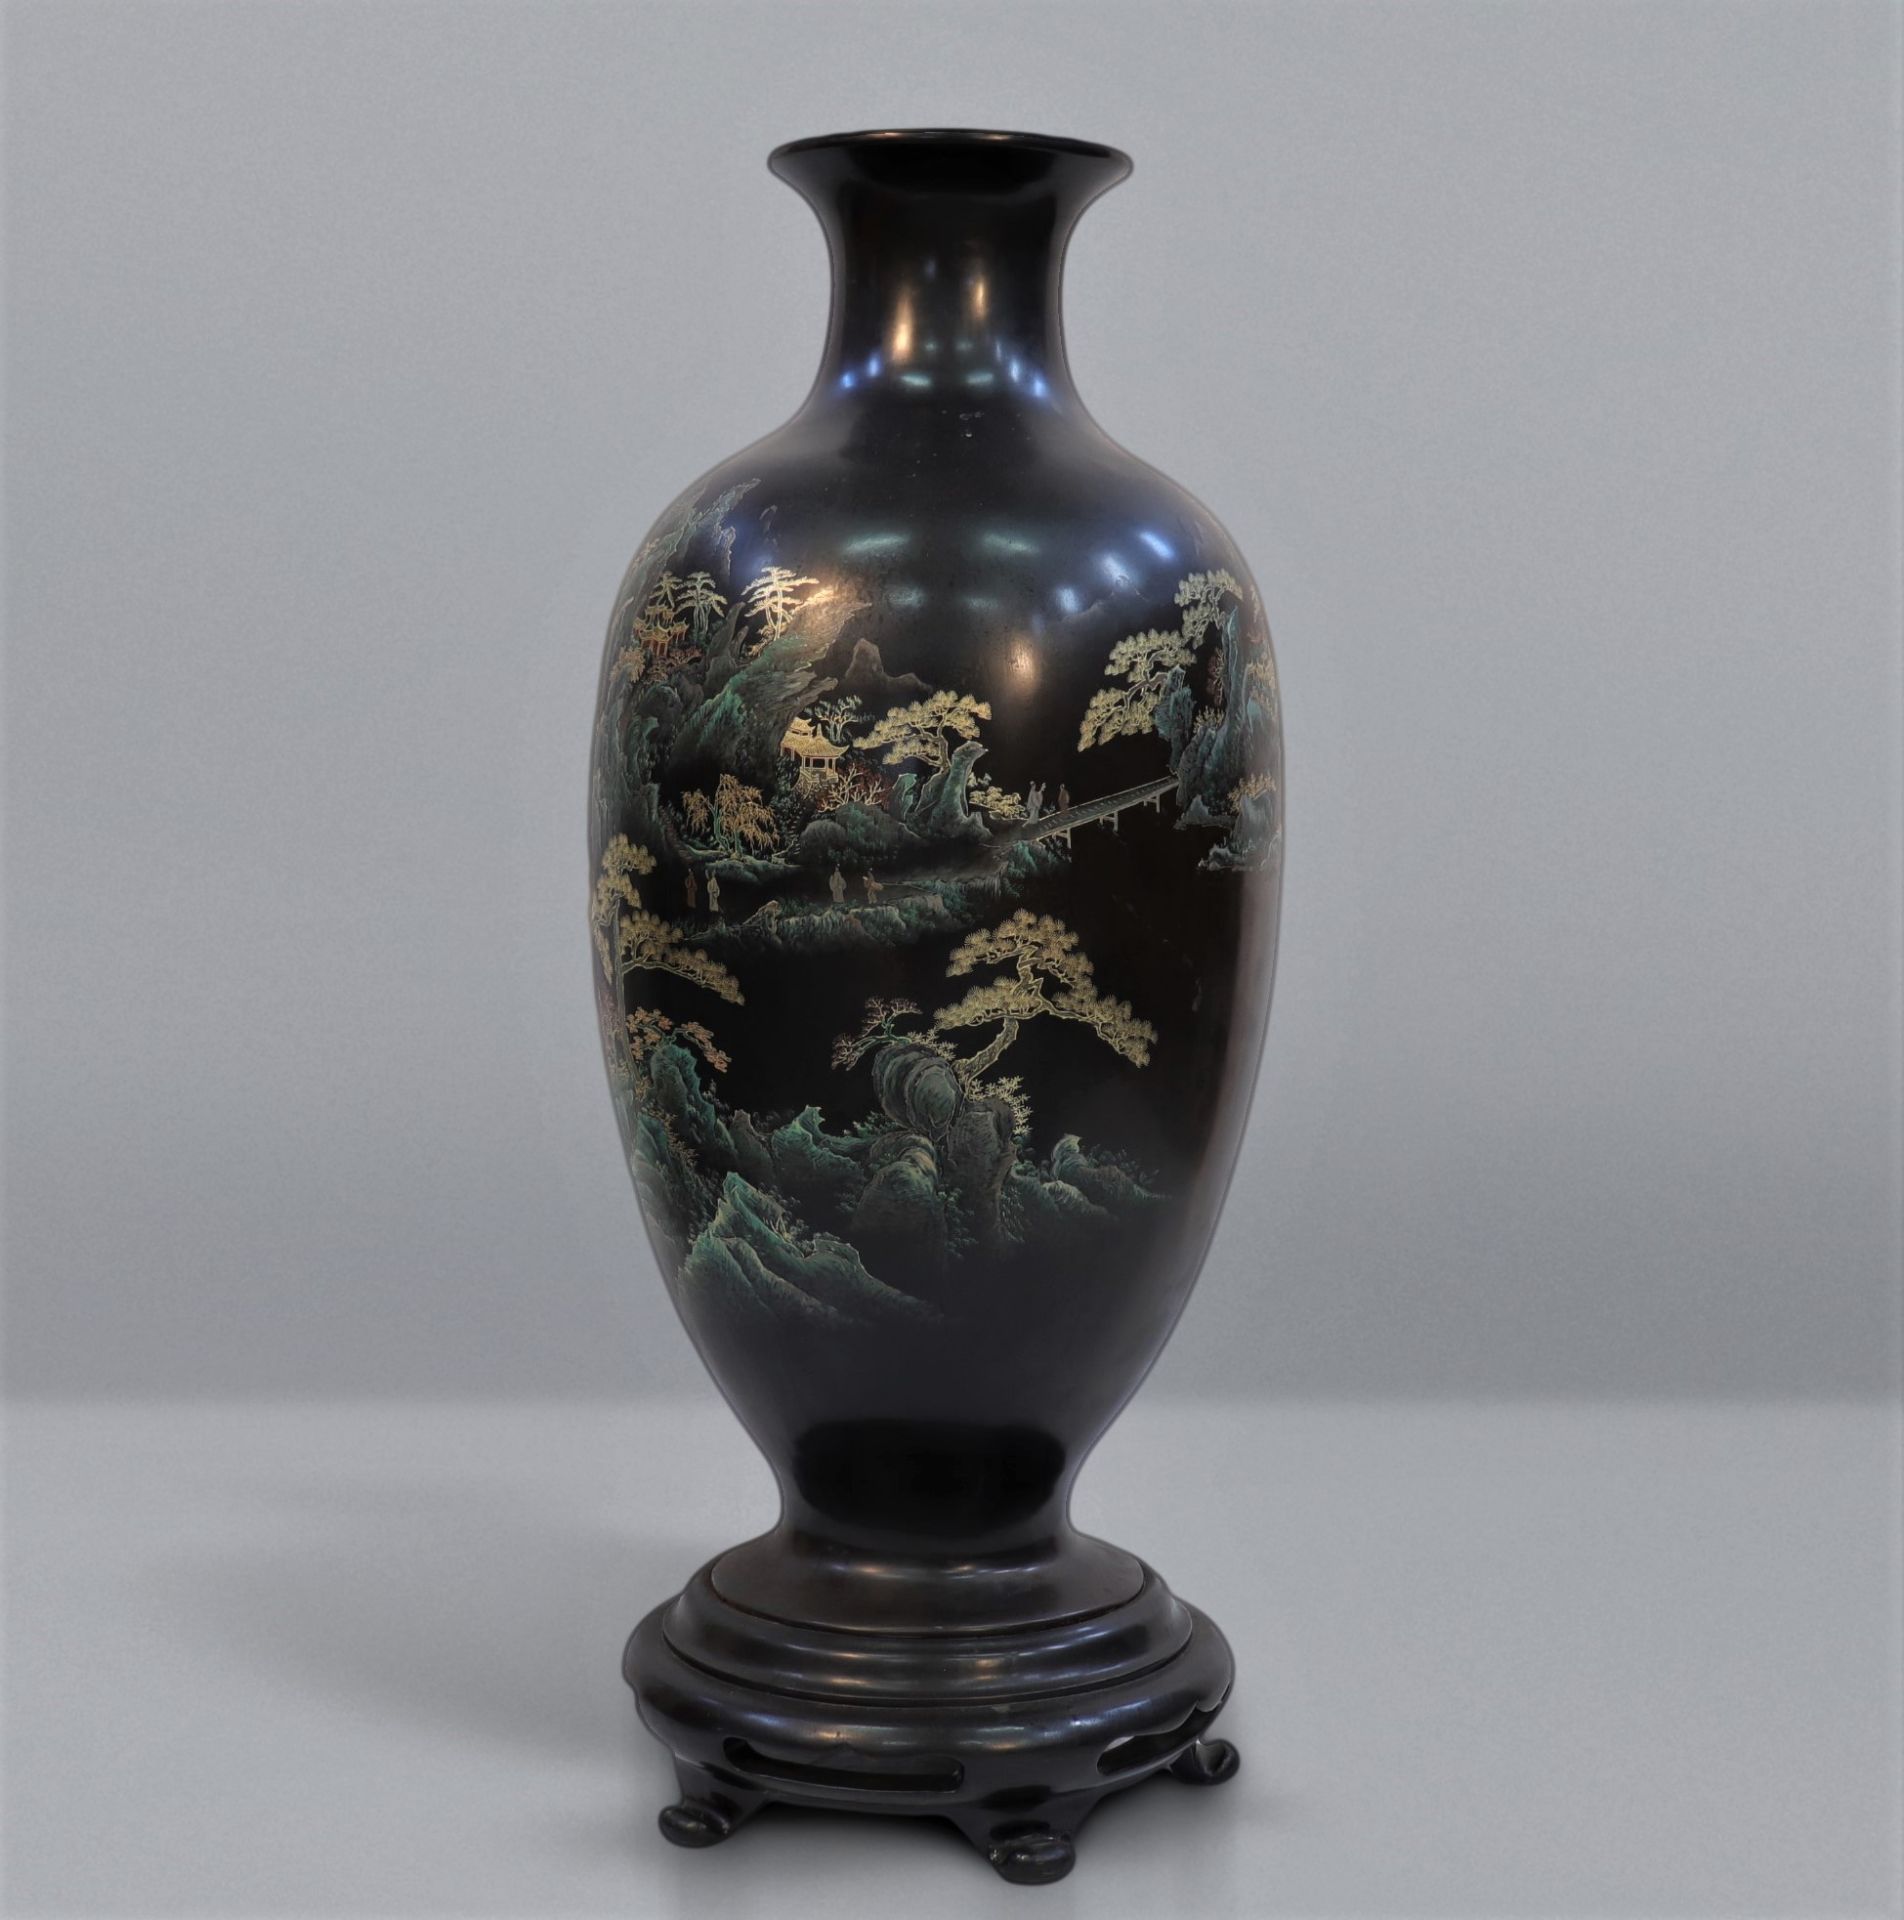 Important (1m10) Fuzhou lacquer vase with landscape decoration - Image 3 of 6